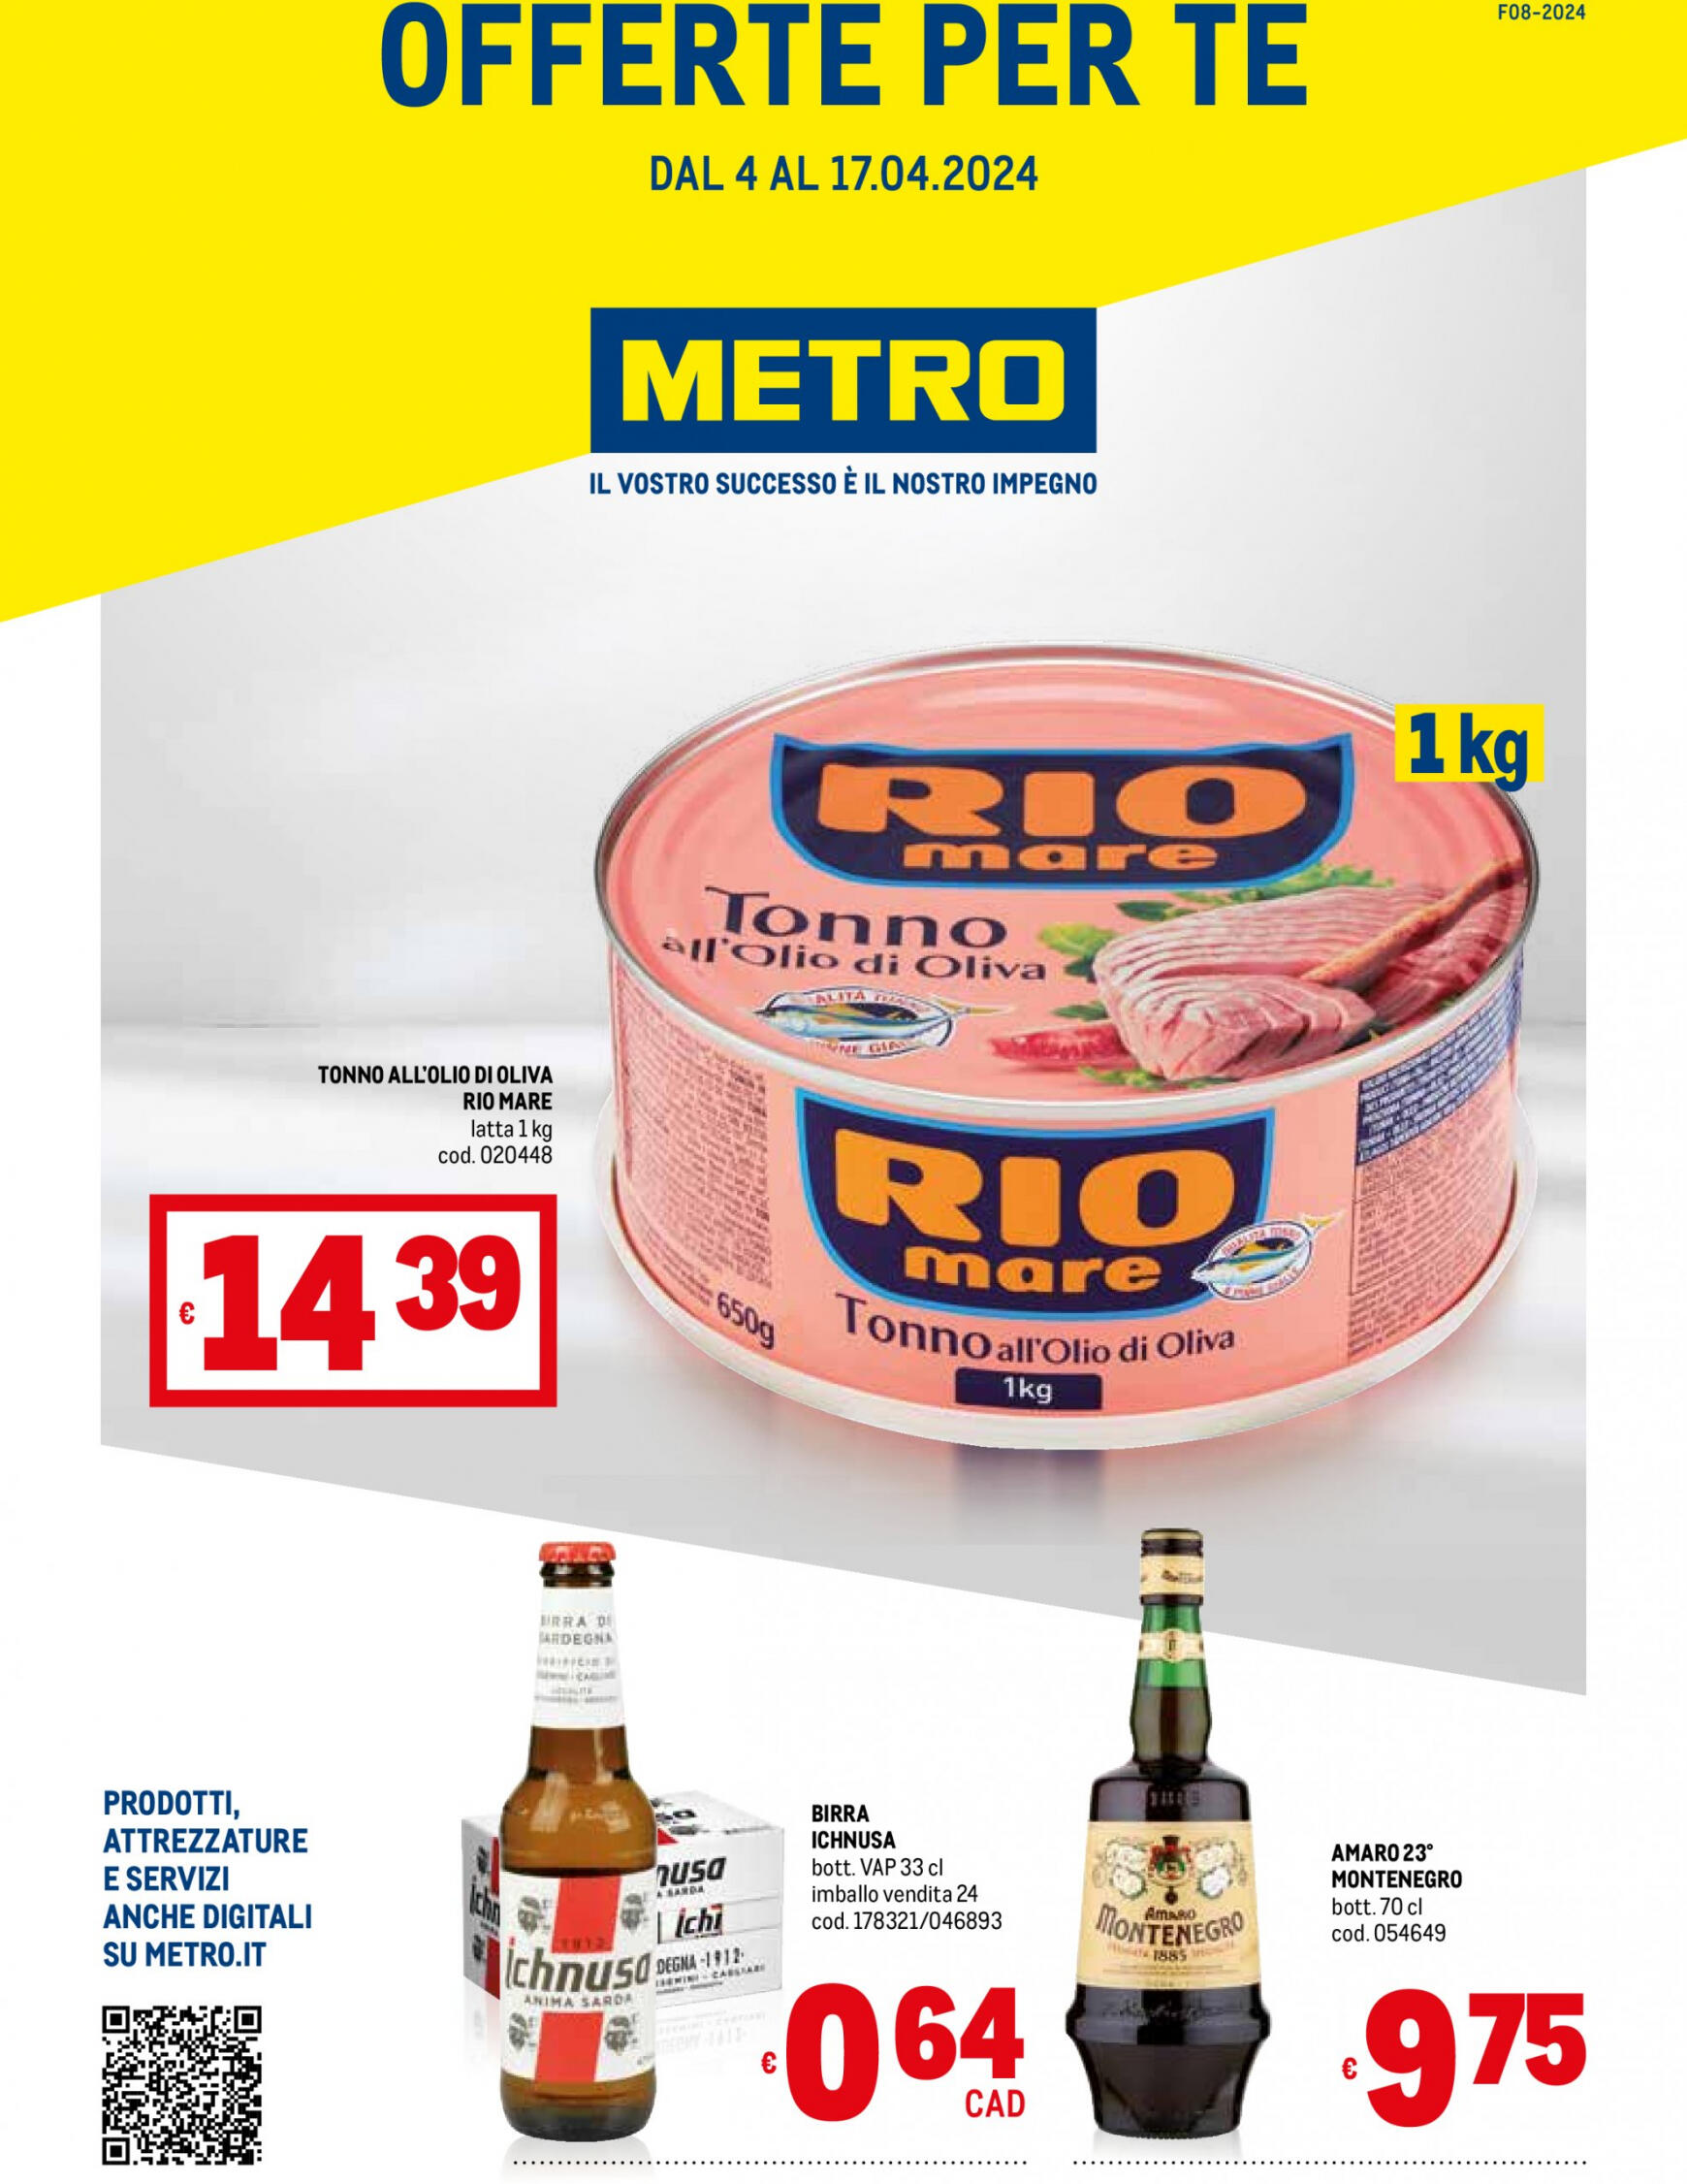 metro - Nuovo volantino Metro - Offerte per te 04.04. - 17.04. - page: 1